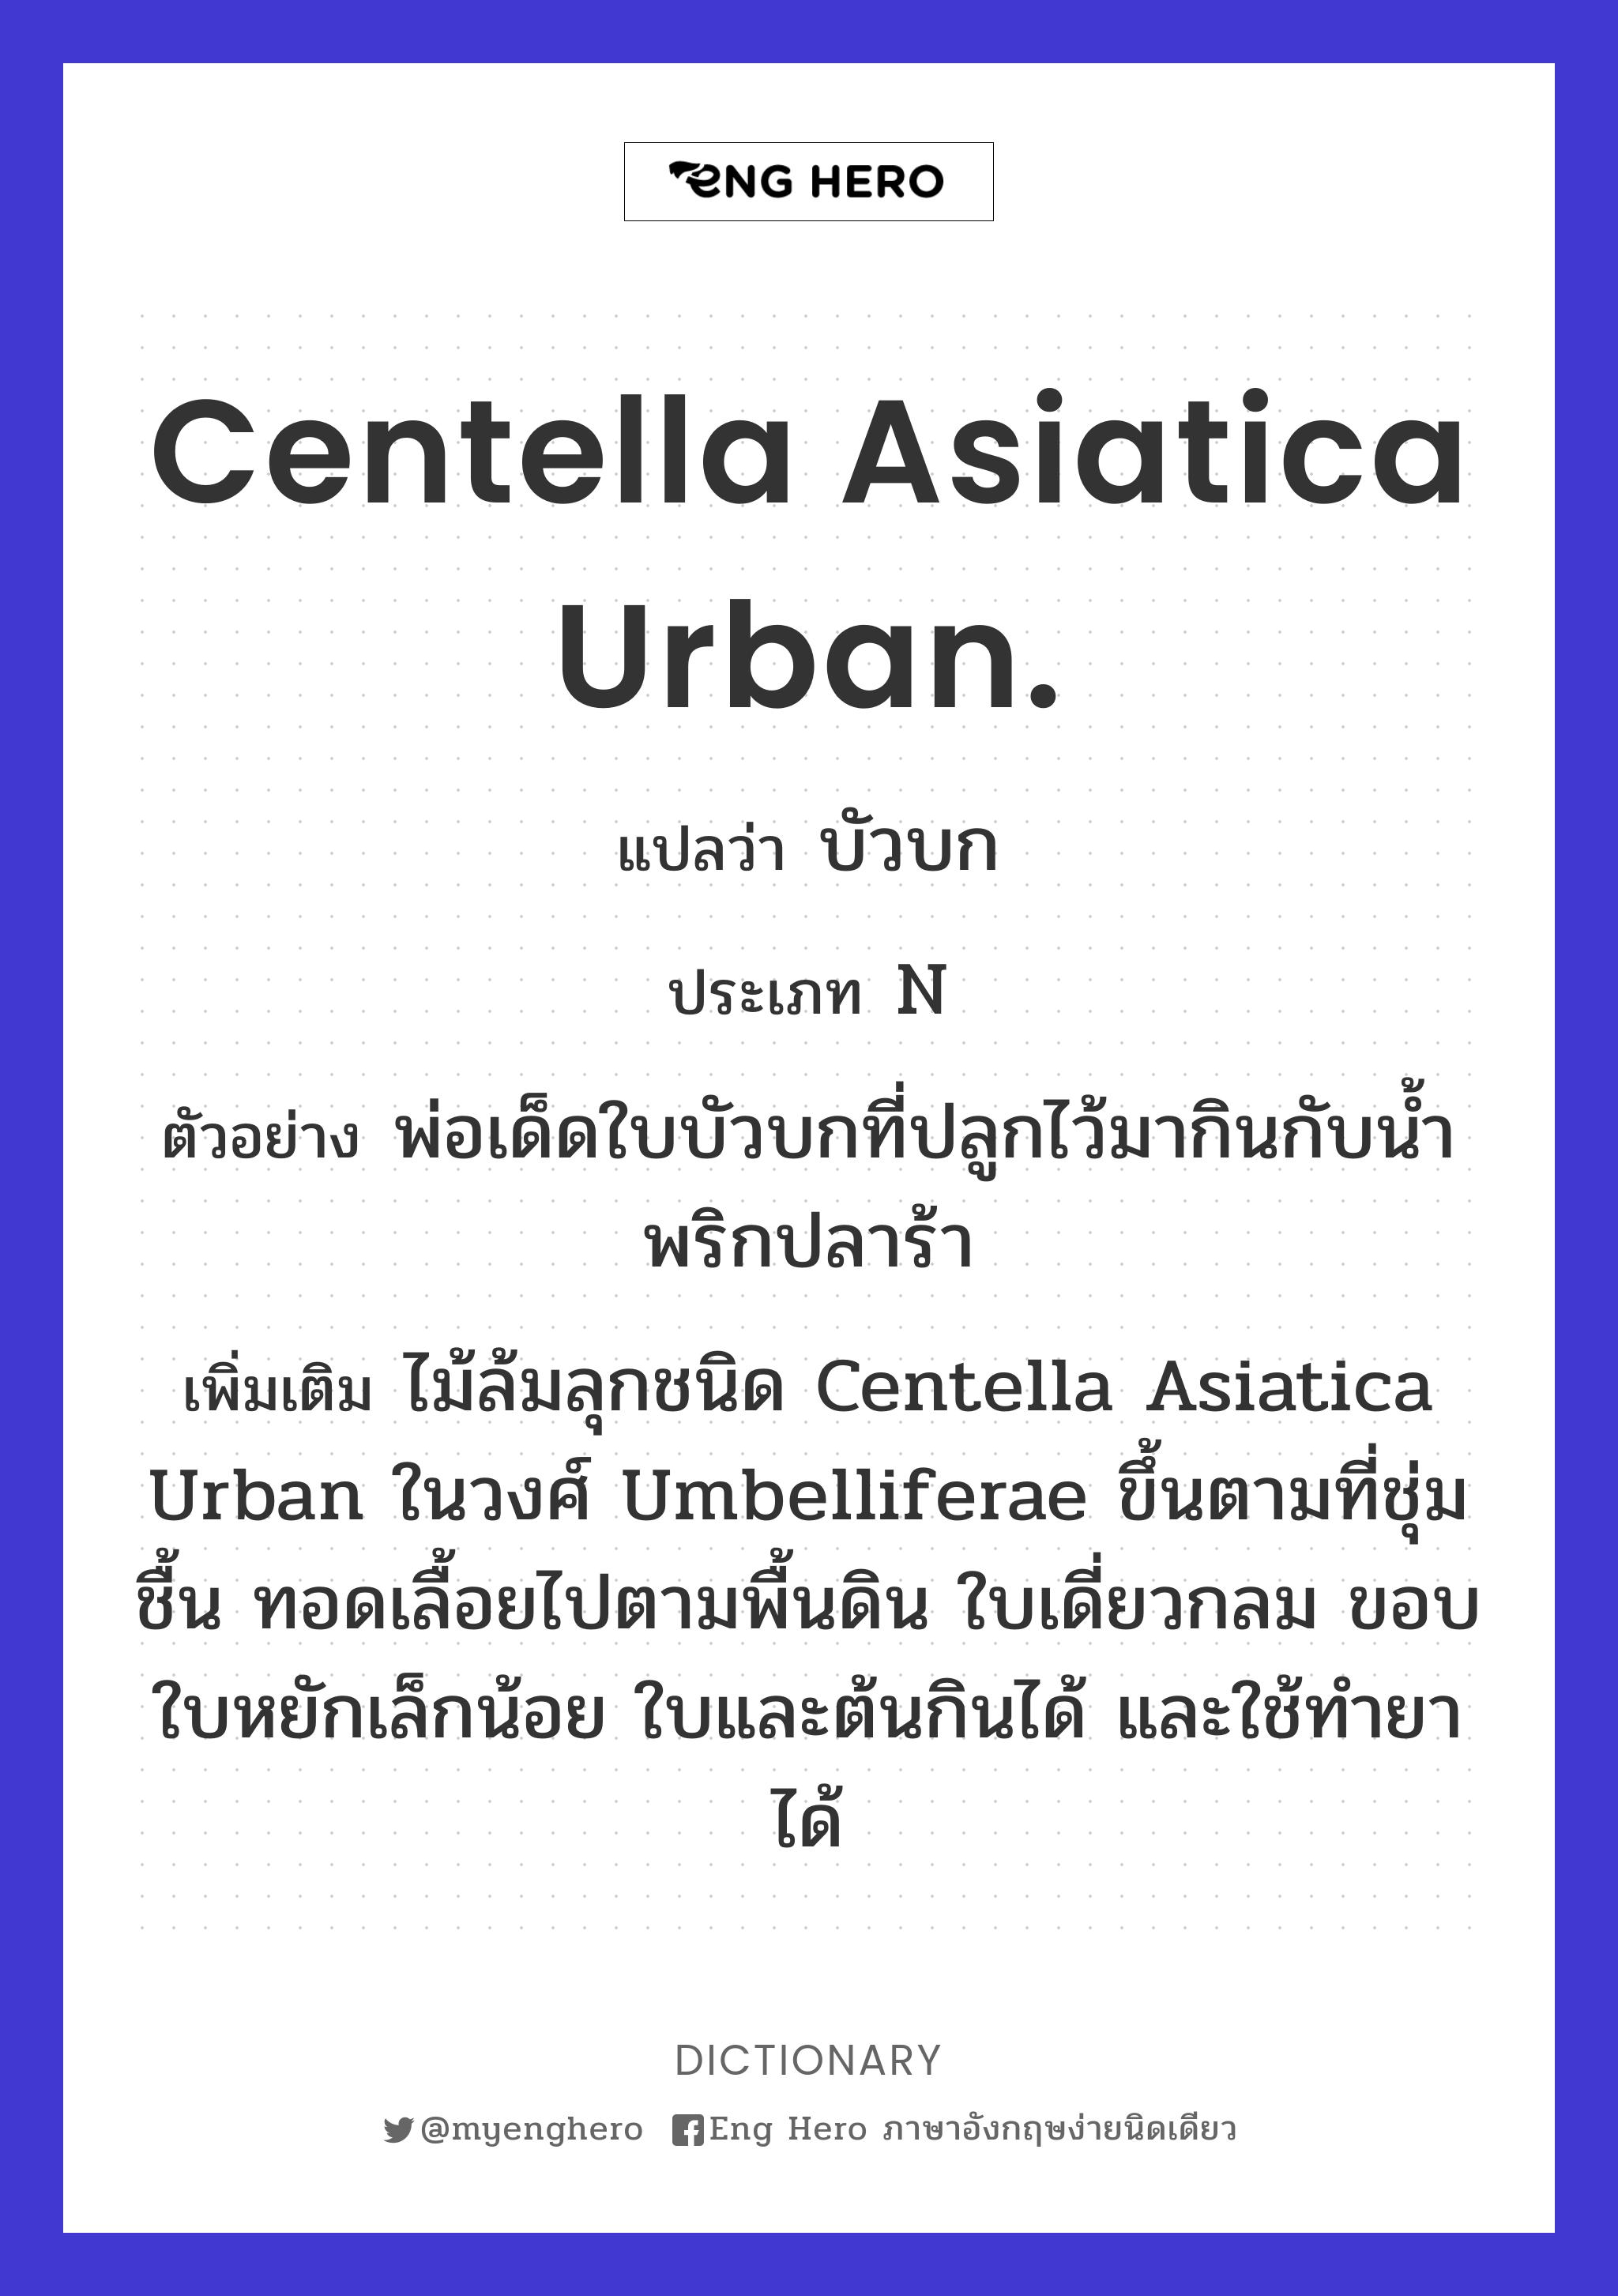 Centella asiatica Urban.